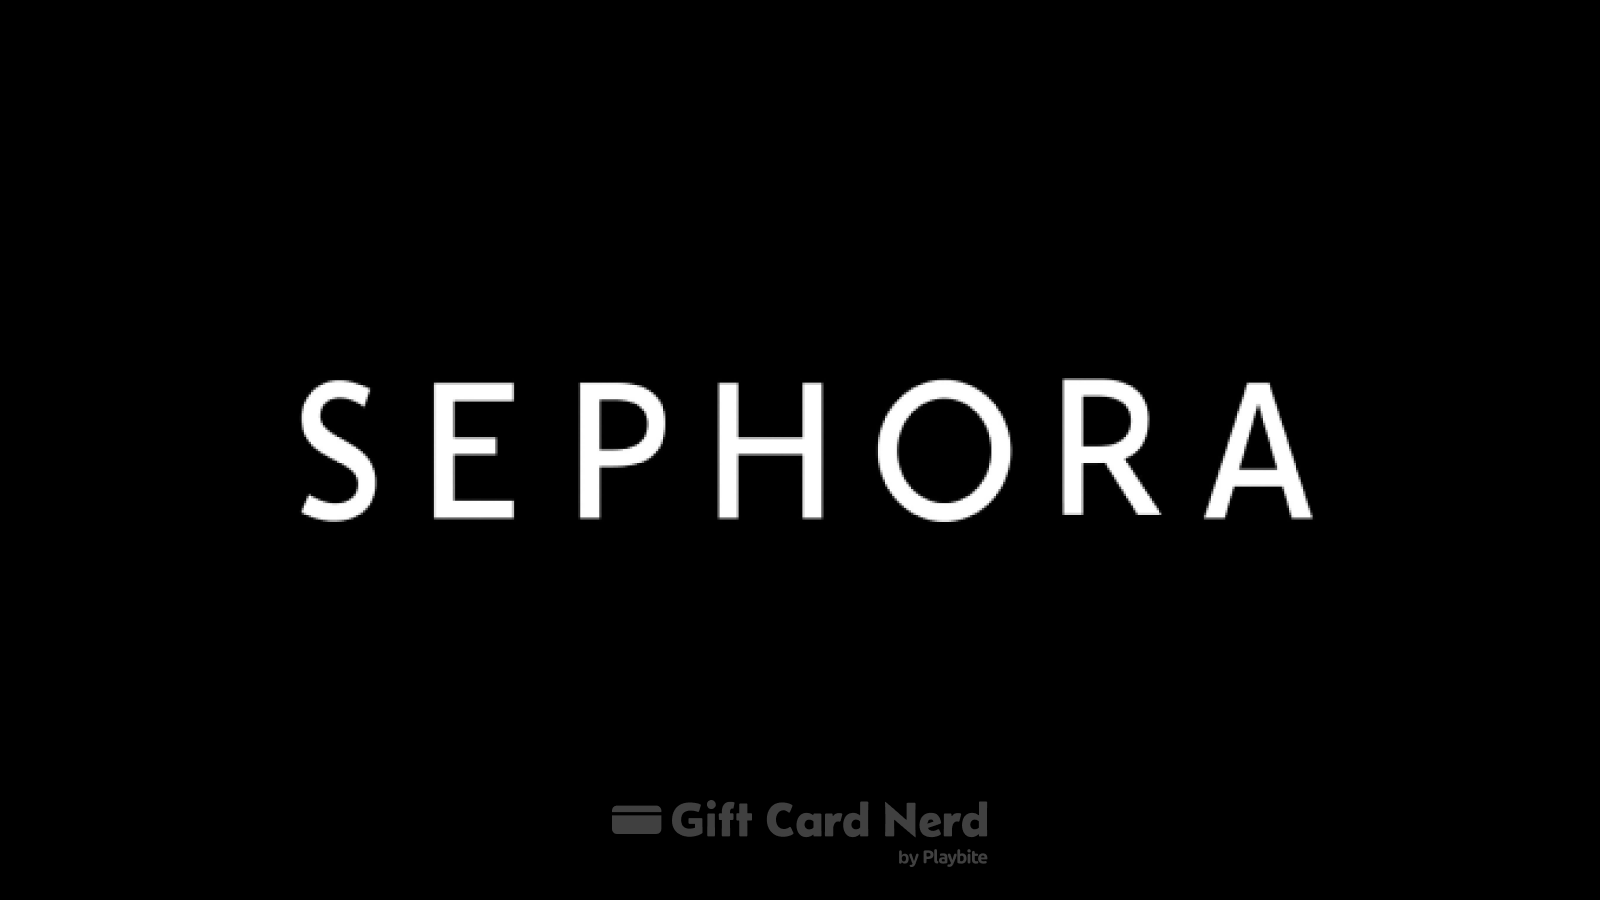 Can I use a Sephora gift card on Grubhub?